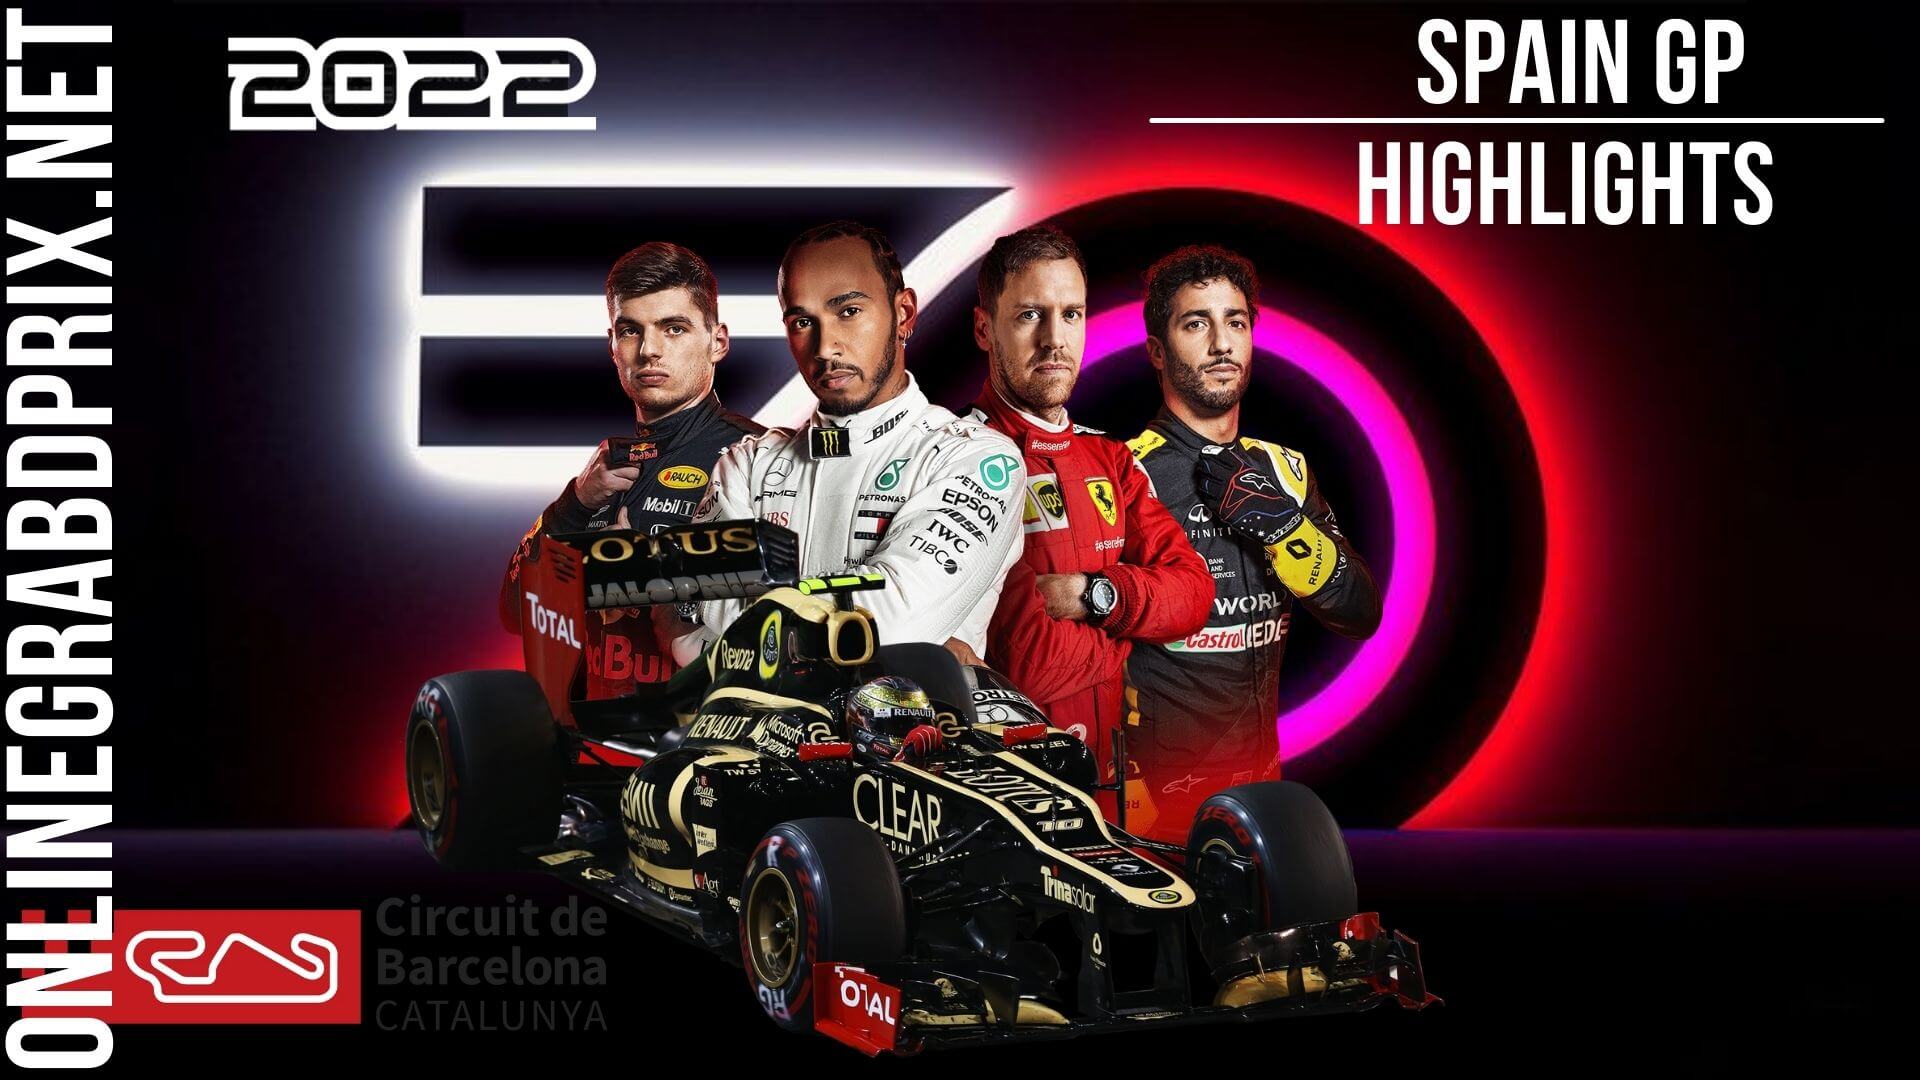 Spain GP F1 Highlights 2022